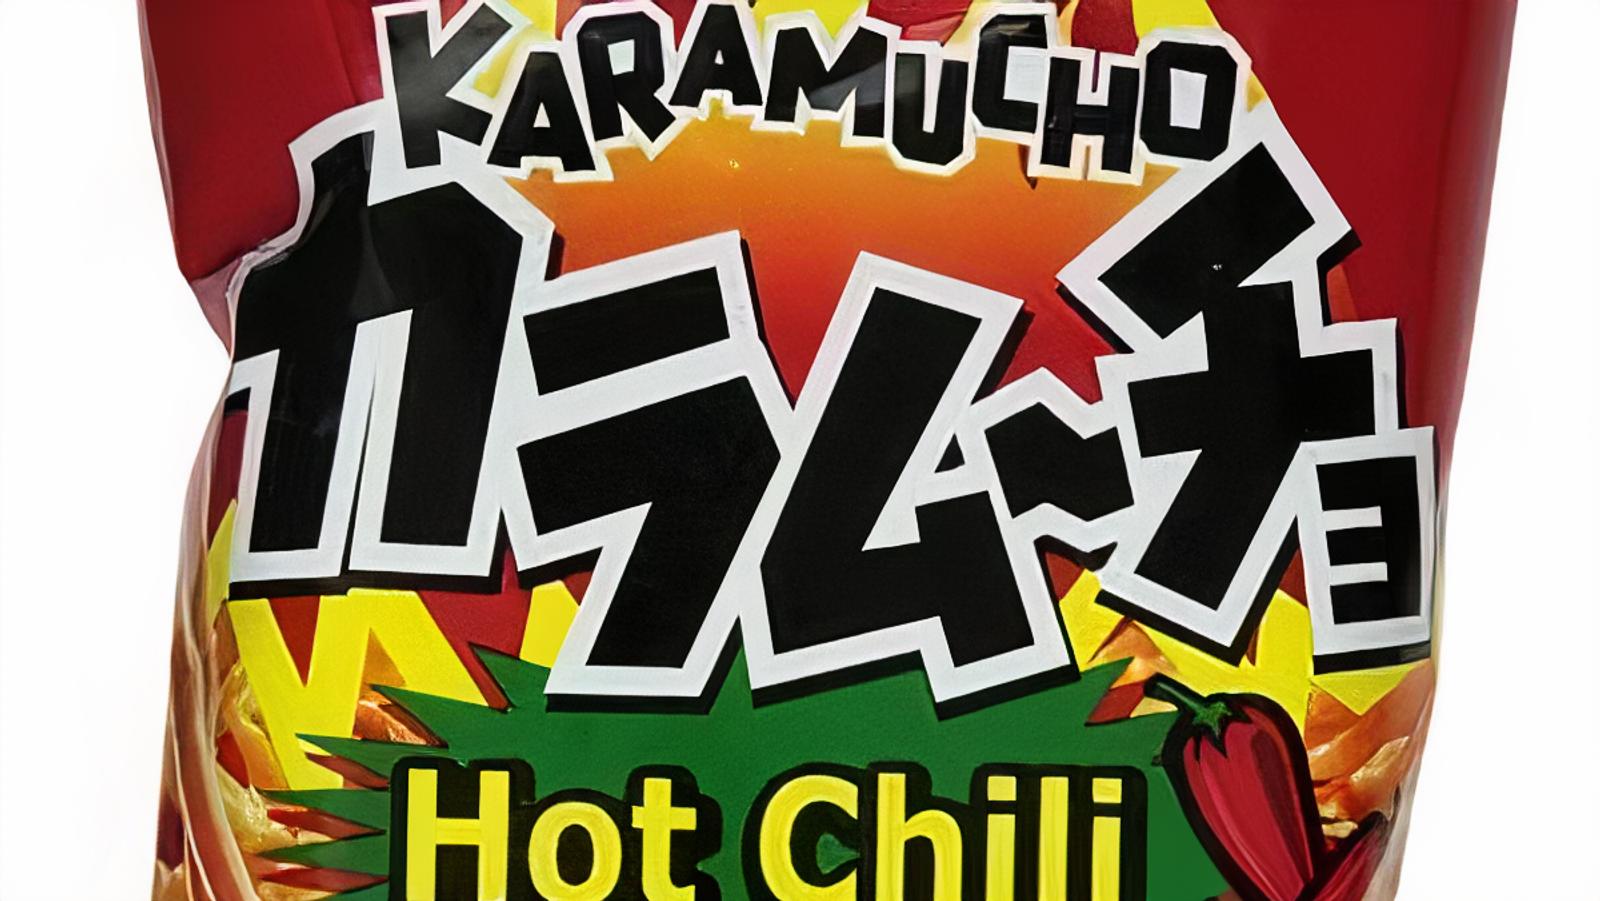 Koikeya Karamucho Sticks Chili (1.41oz)